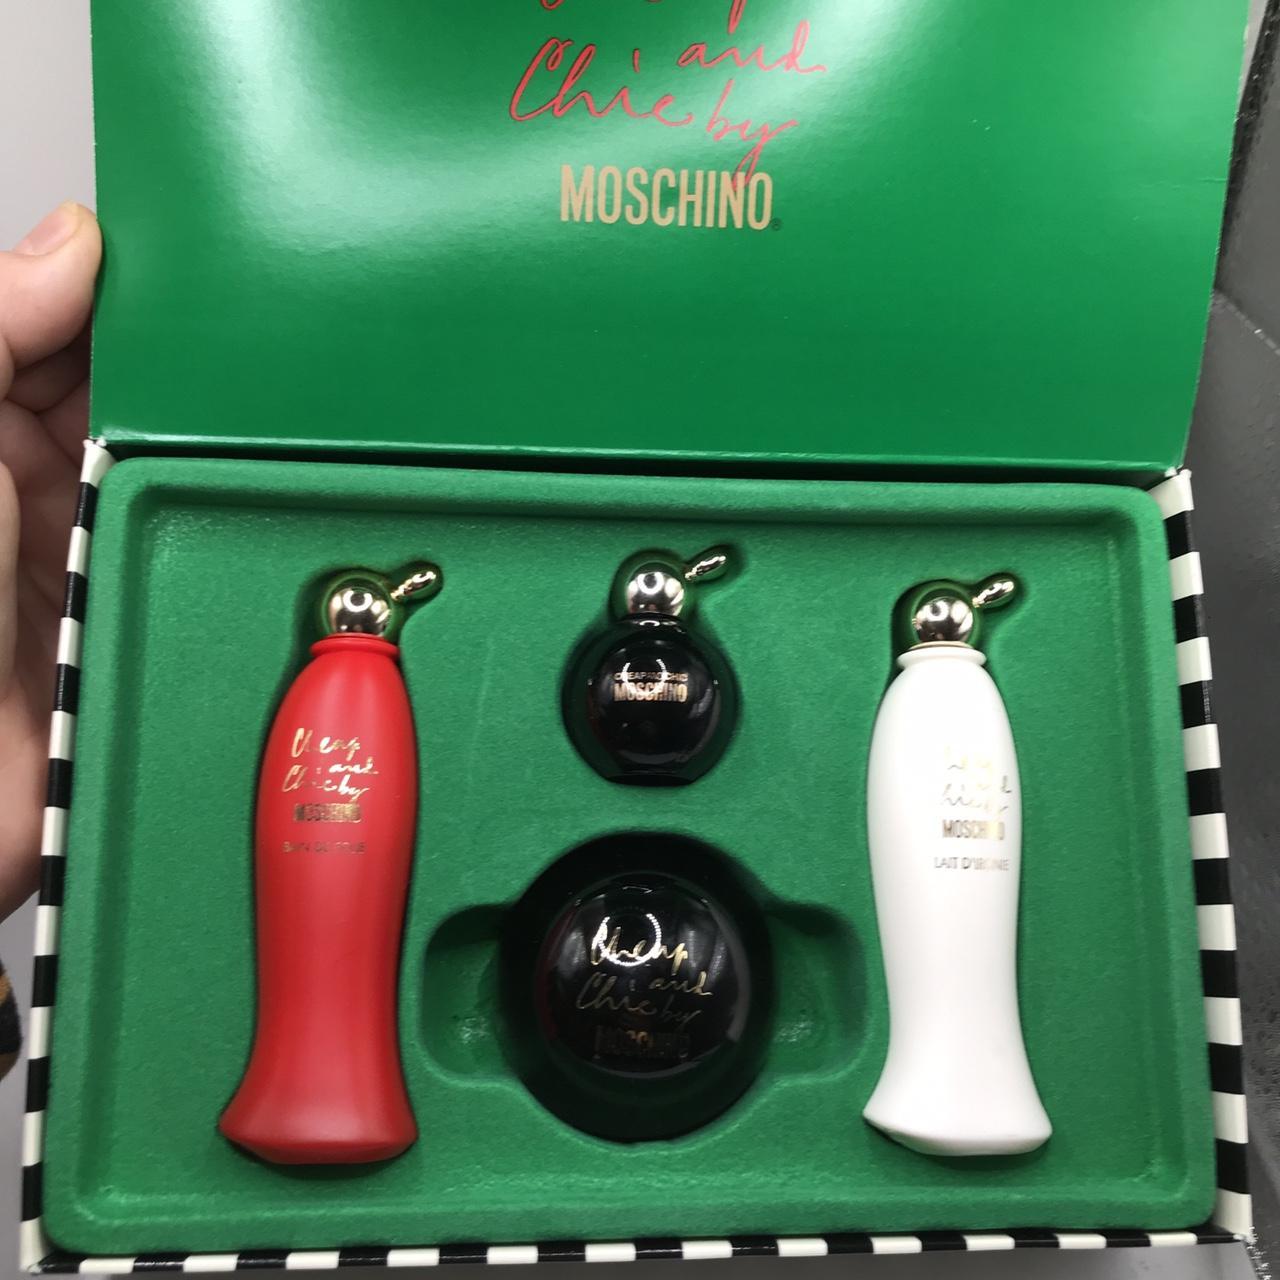 Moschino Cheap and Chic Miniature Parfum set: Edt... - Depop